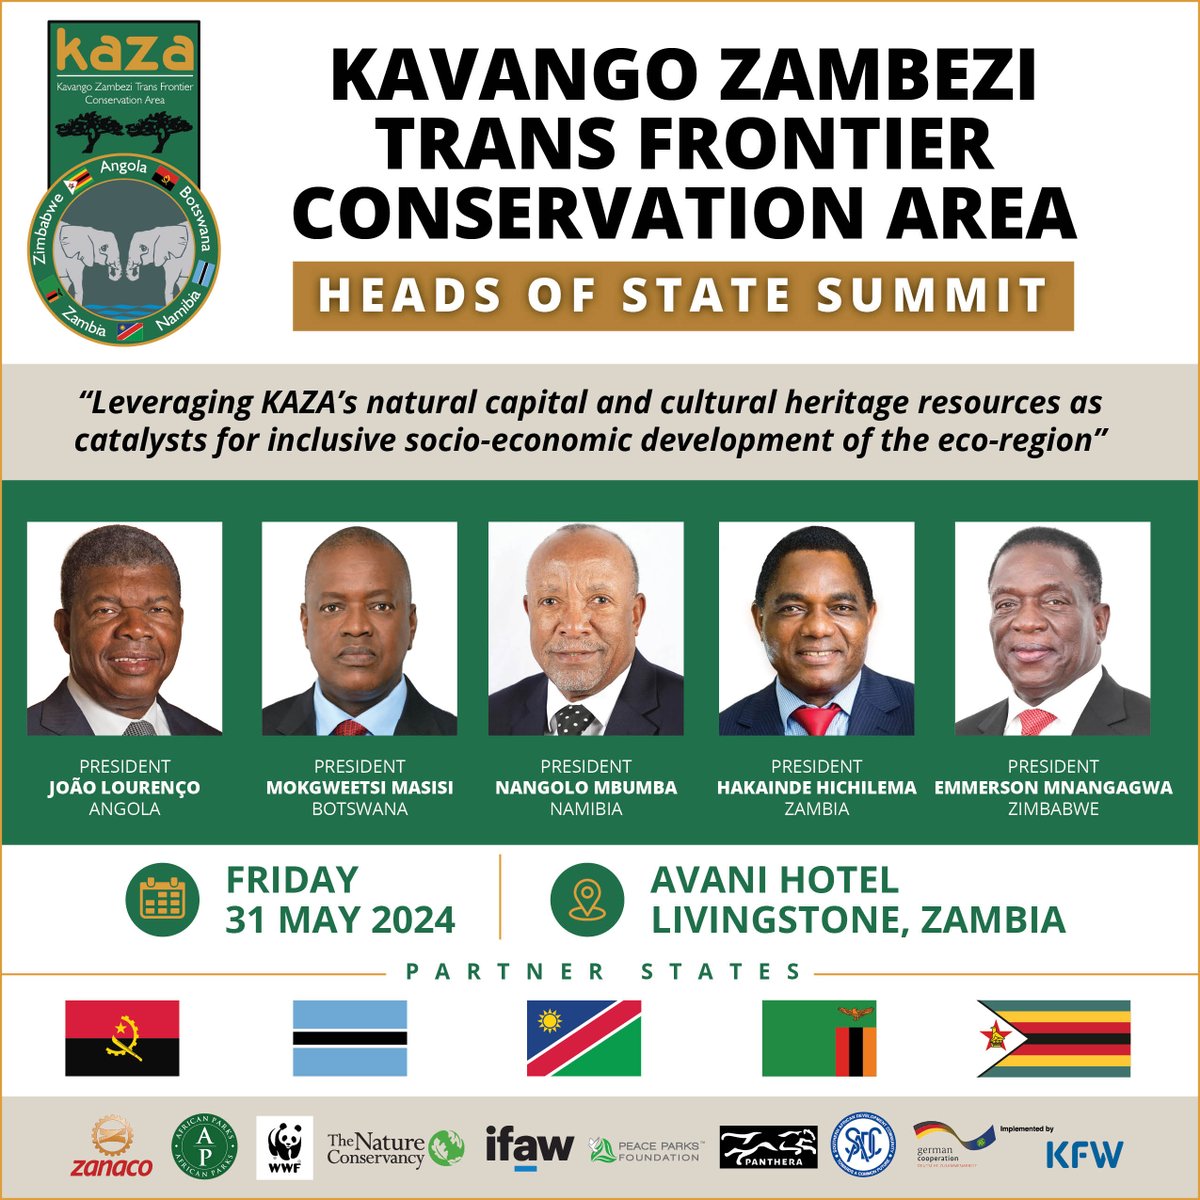 Zambia is set to host the Kavango Zambezi (KAZA) Transfrontier Conservation Area (TFCA) Heads of State Summit on 31st May, 2024 at Avani Hotel in Livingstone.